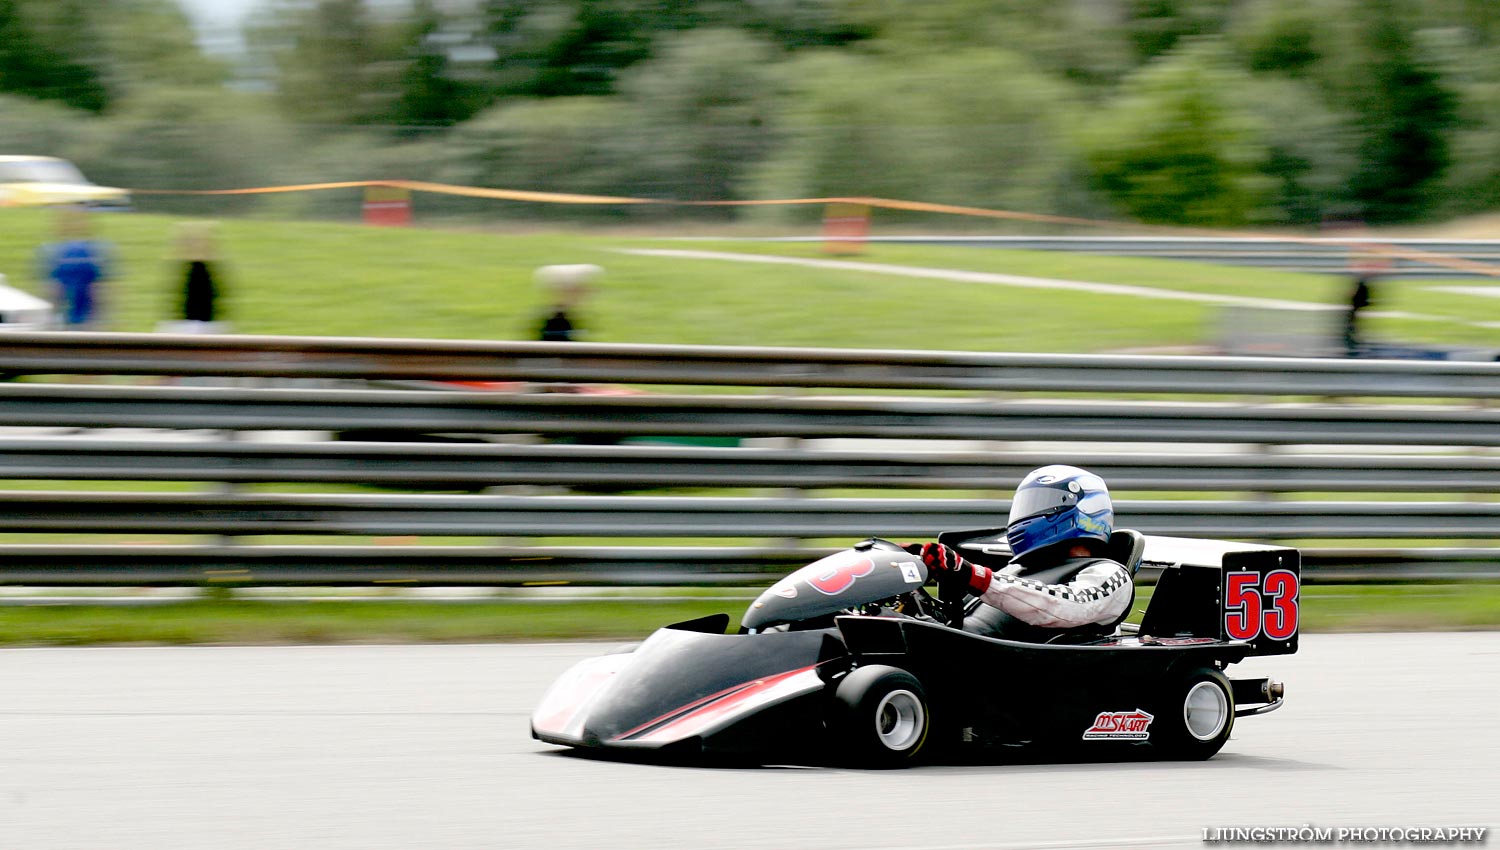 SSK Raceweek,mix,Kinnekulle Ring,Götene,Sverige,Motorsport,,2009,107637